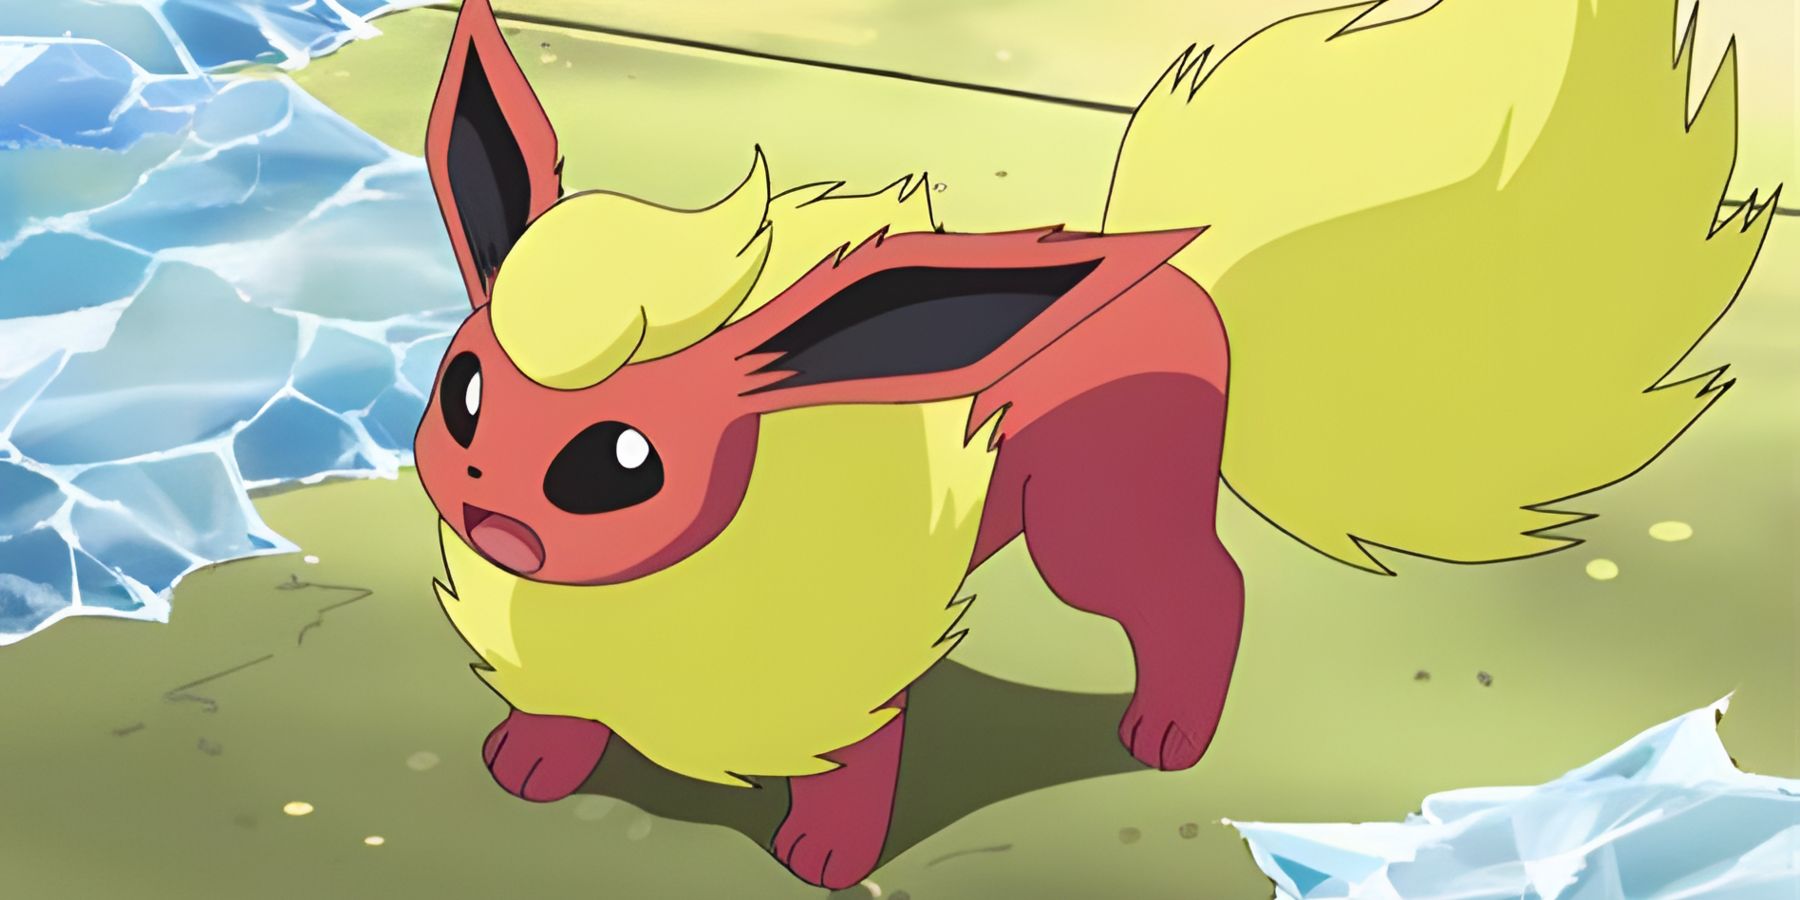 Un Pokémon Flareon en la playa en los dibujos animados de Pokémon.